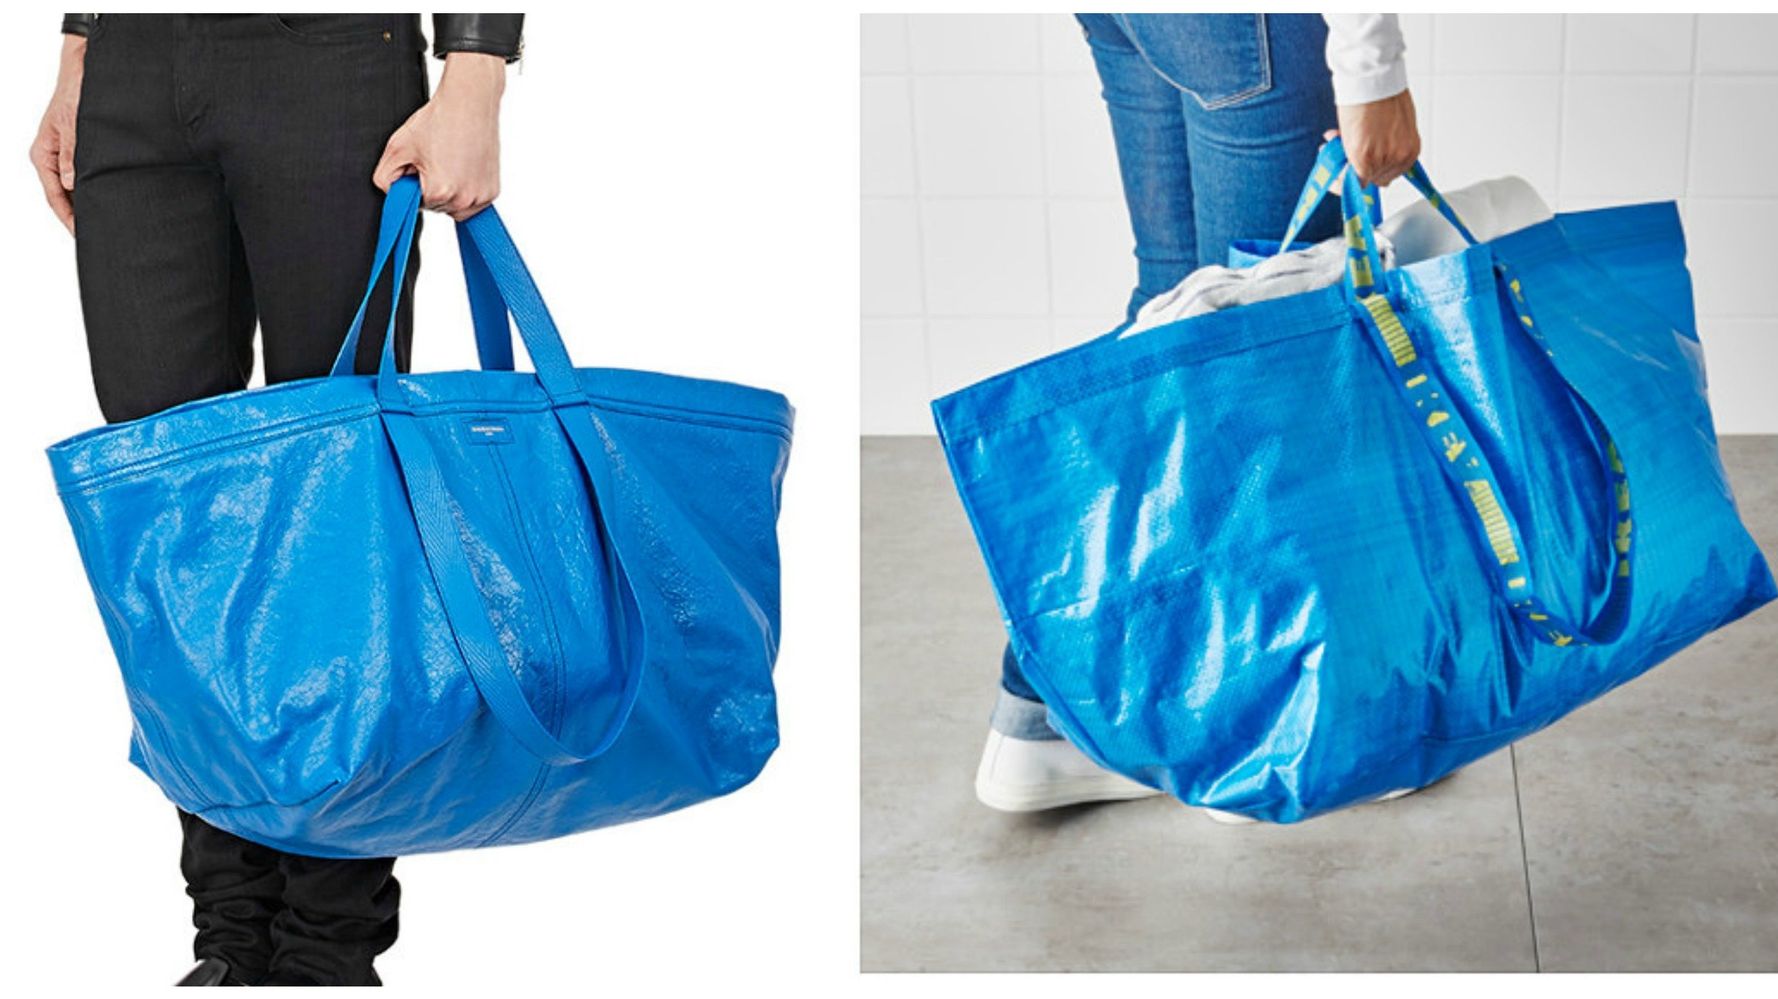 Balenciaga sells £1,705 version of IKEA's blue tote bag worth 40p